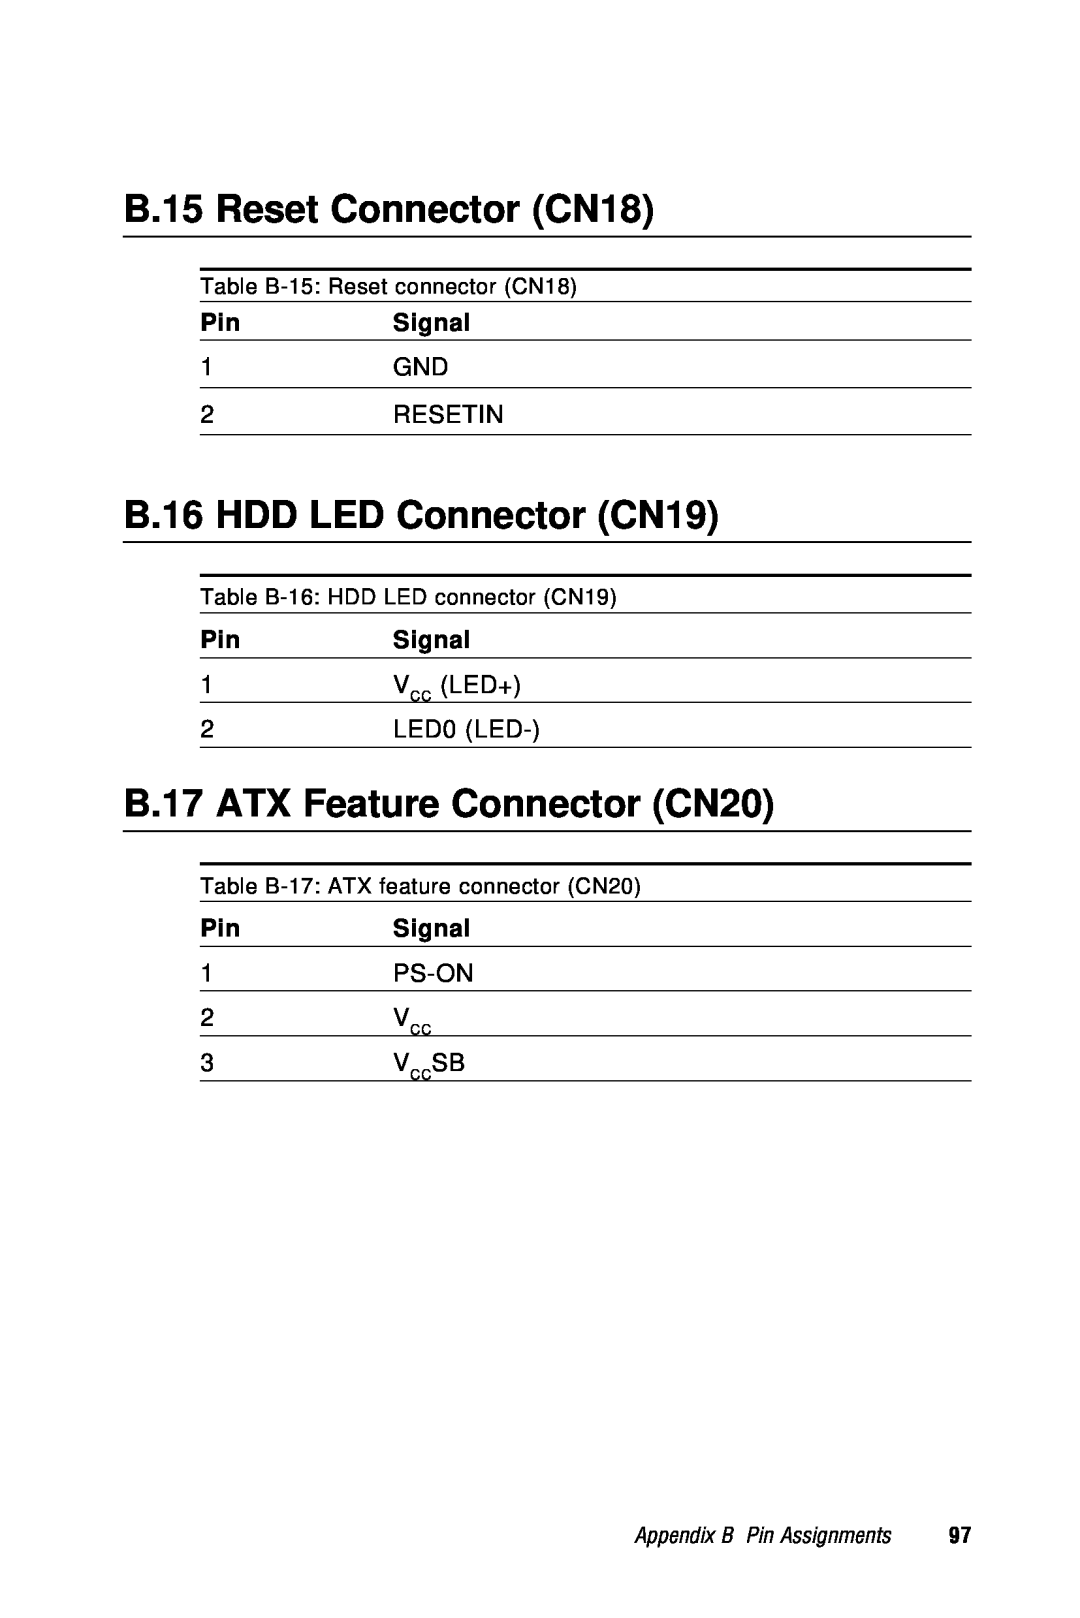 Advantech PCA-6359 B.15 Reset Connector CN18, B.16 HDD LED Connector CN19, B.17 ATX Feature Connector CN20, 1GND 2RESETIN 